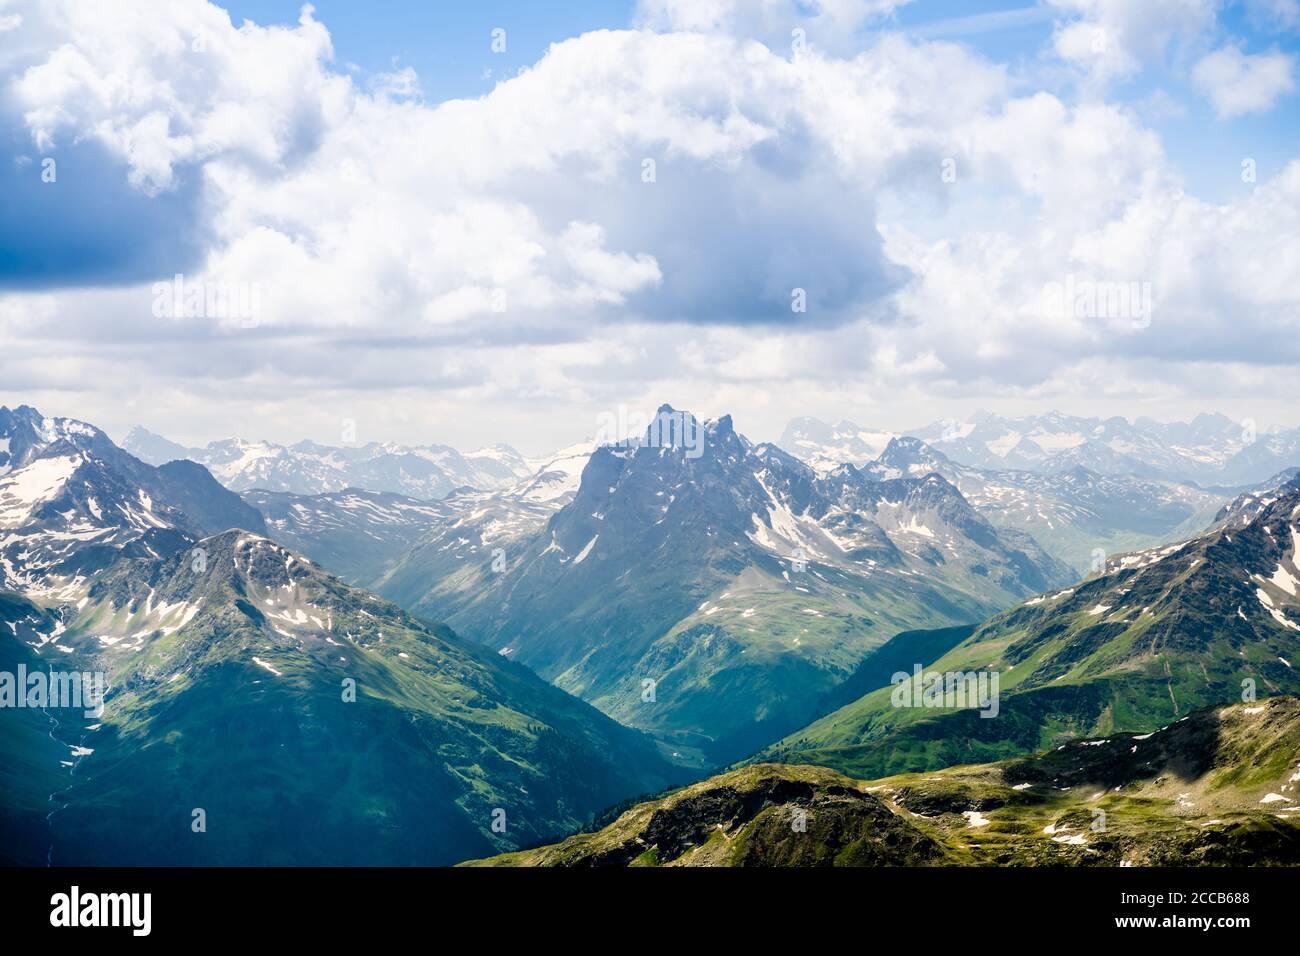 Alps Mountains. Alpine Austria Mountain With Clouds Stock Photo